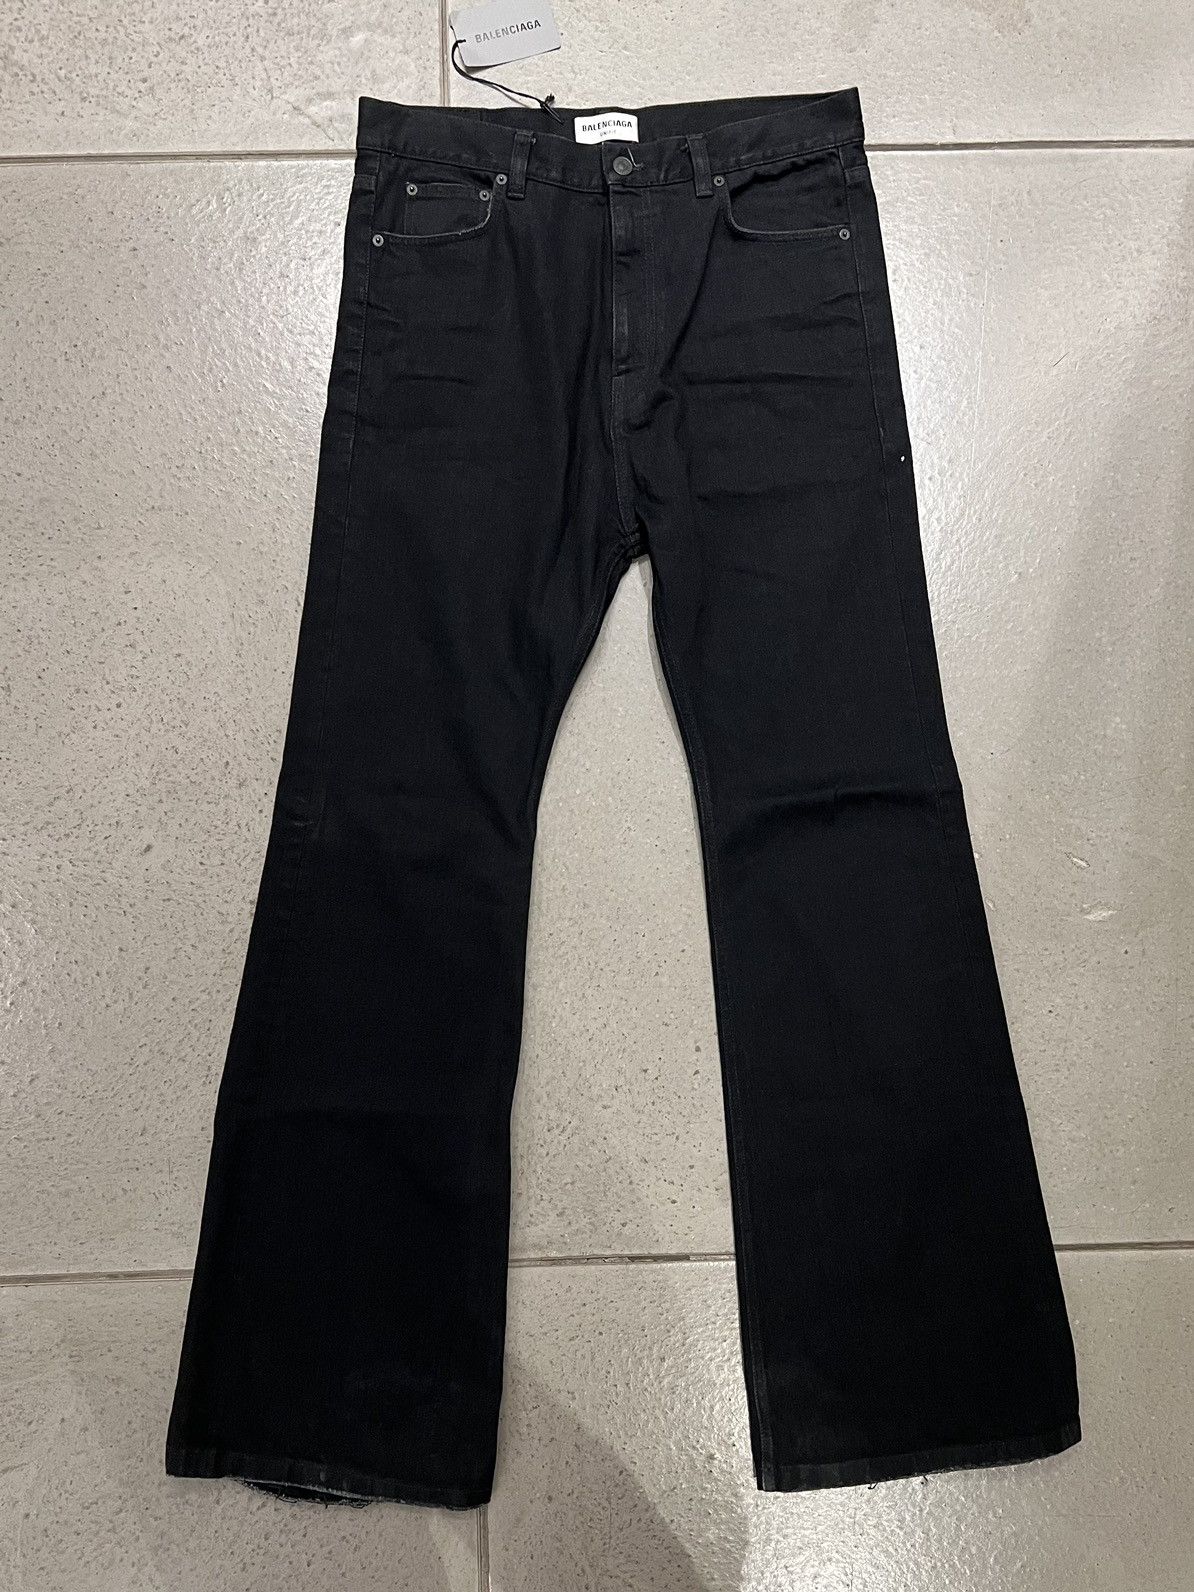 Balenciaga Balenciaga FW22 the lost tape flared jeans | Grailed